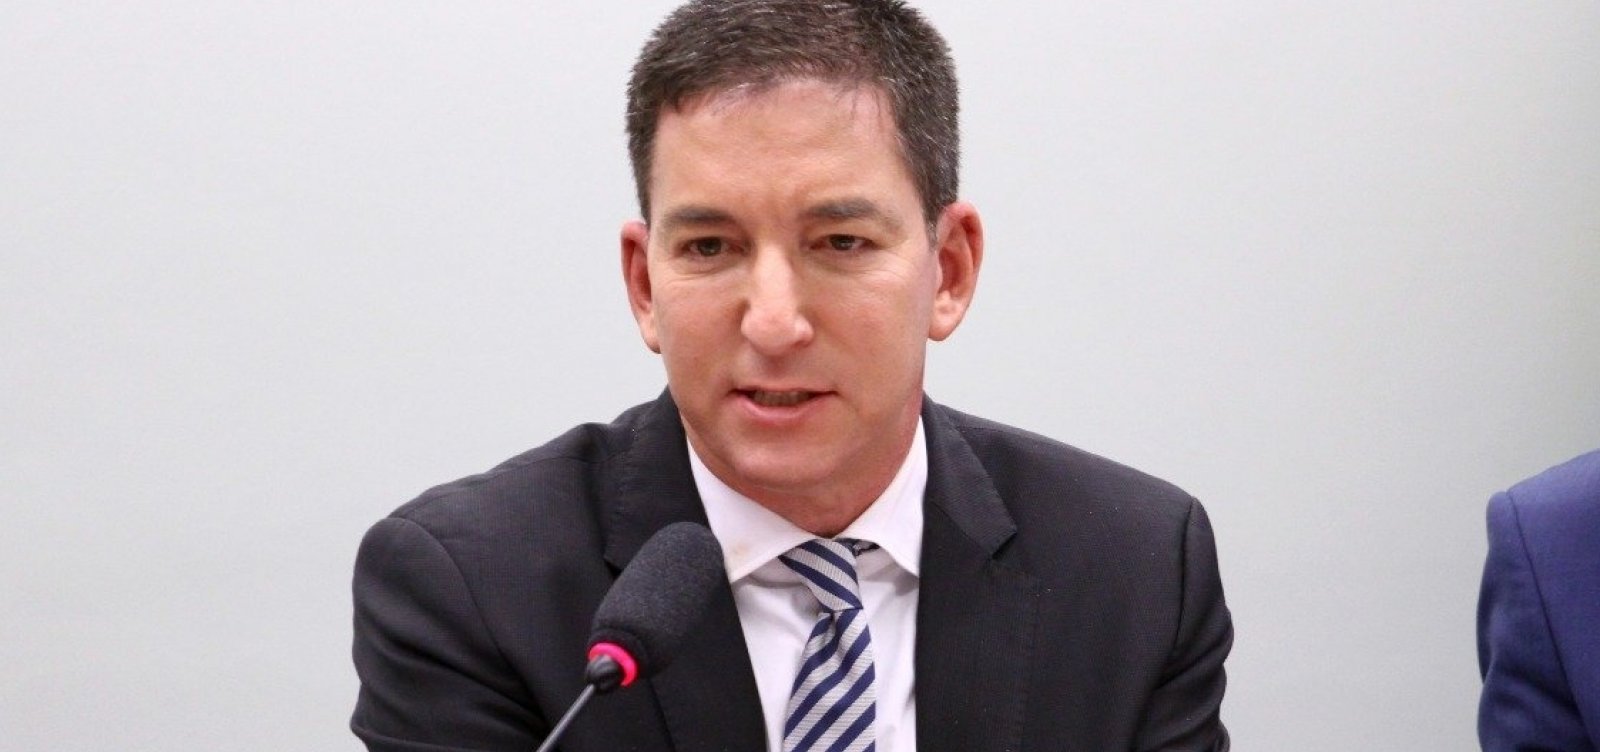 Juiz rejeita, 'por ora', denúncia contra Glenn Greenwald